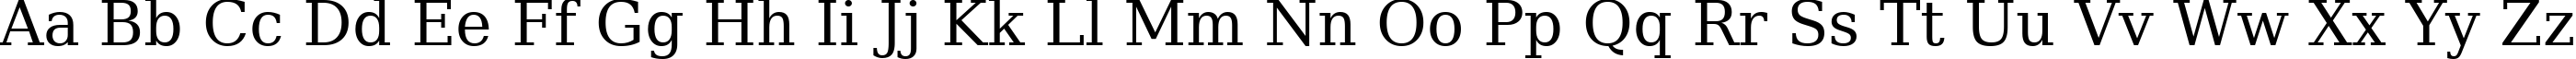 Пример написания английского алфавита шрифтом ae_Petra